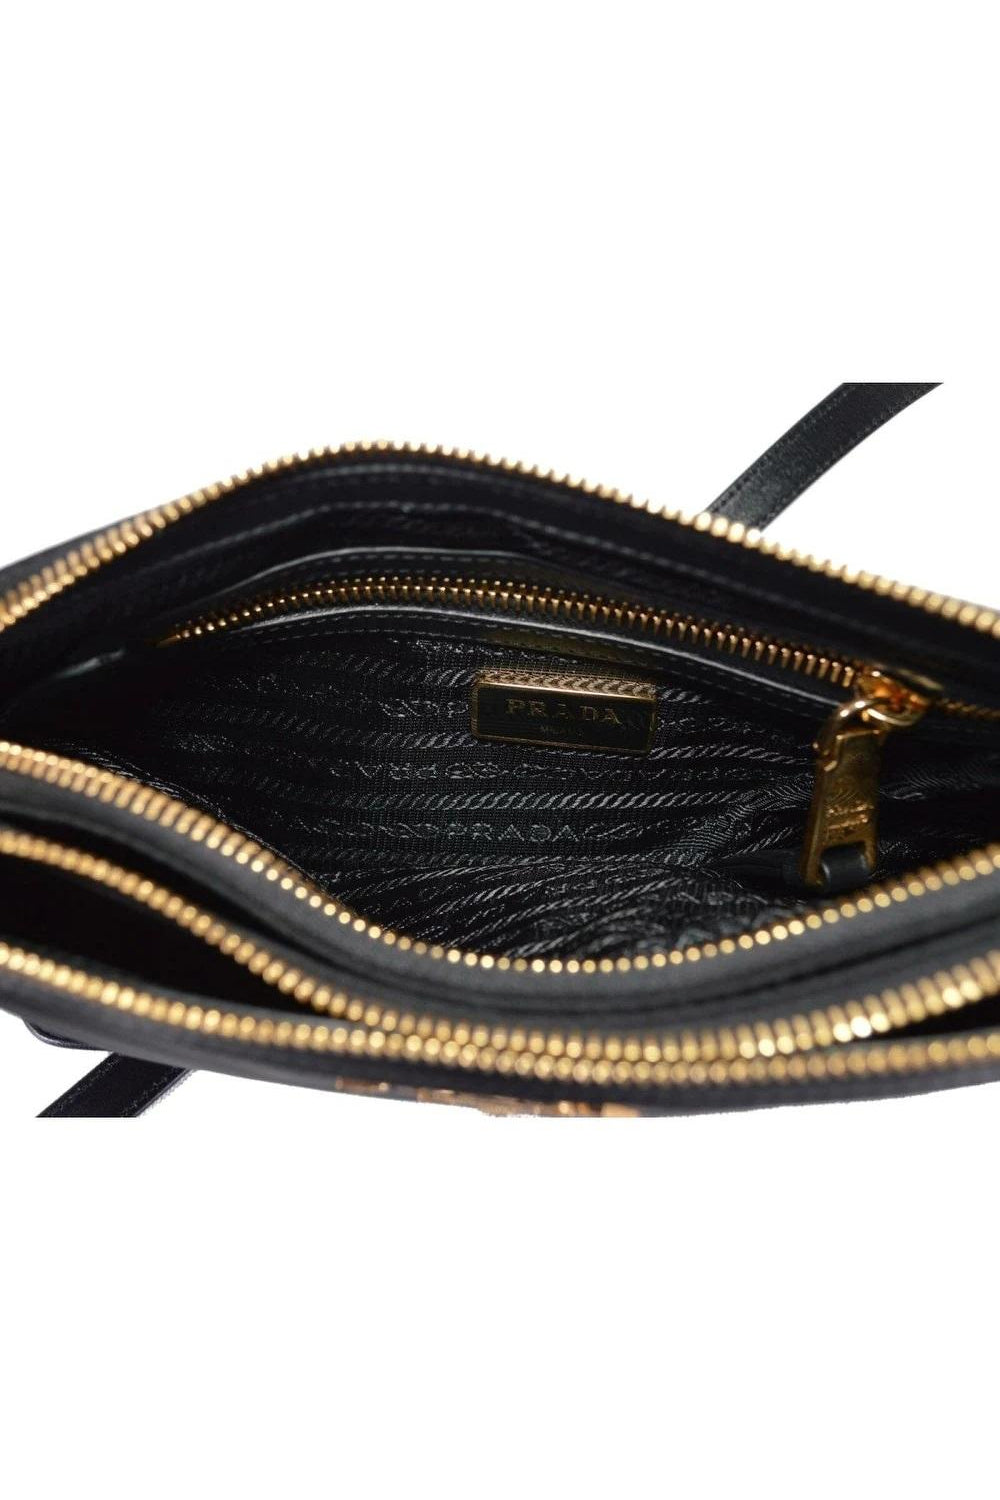 Prada Phenix Leather Shoulder Camera Bag